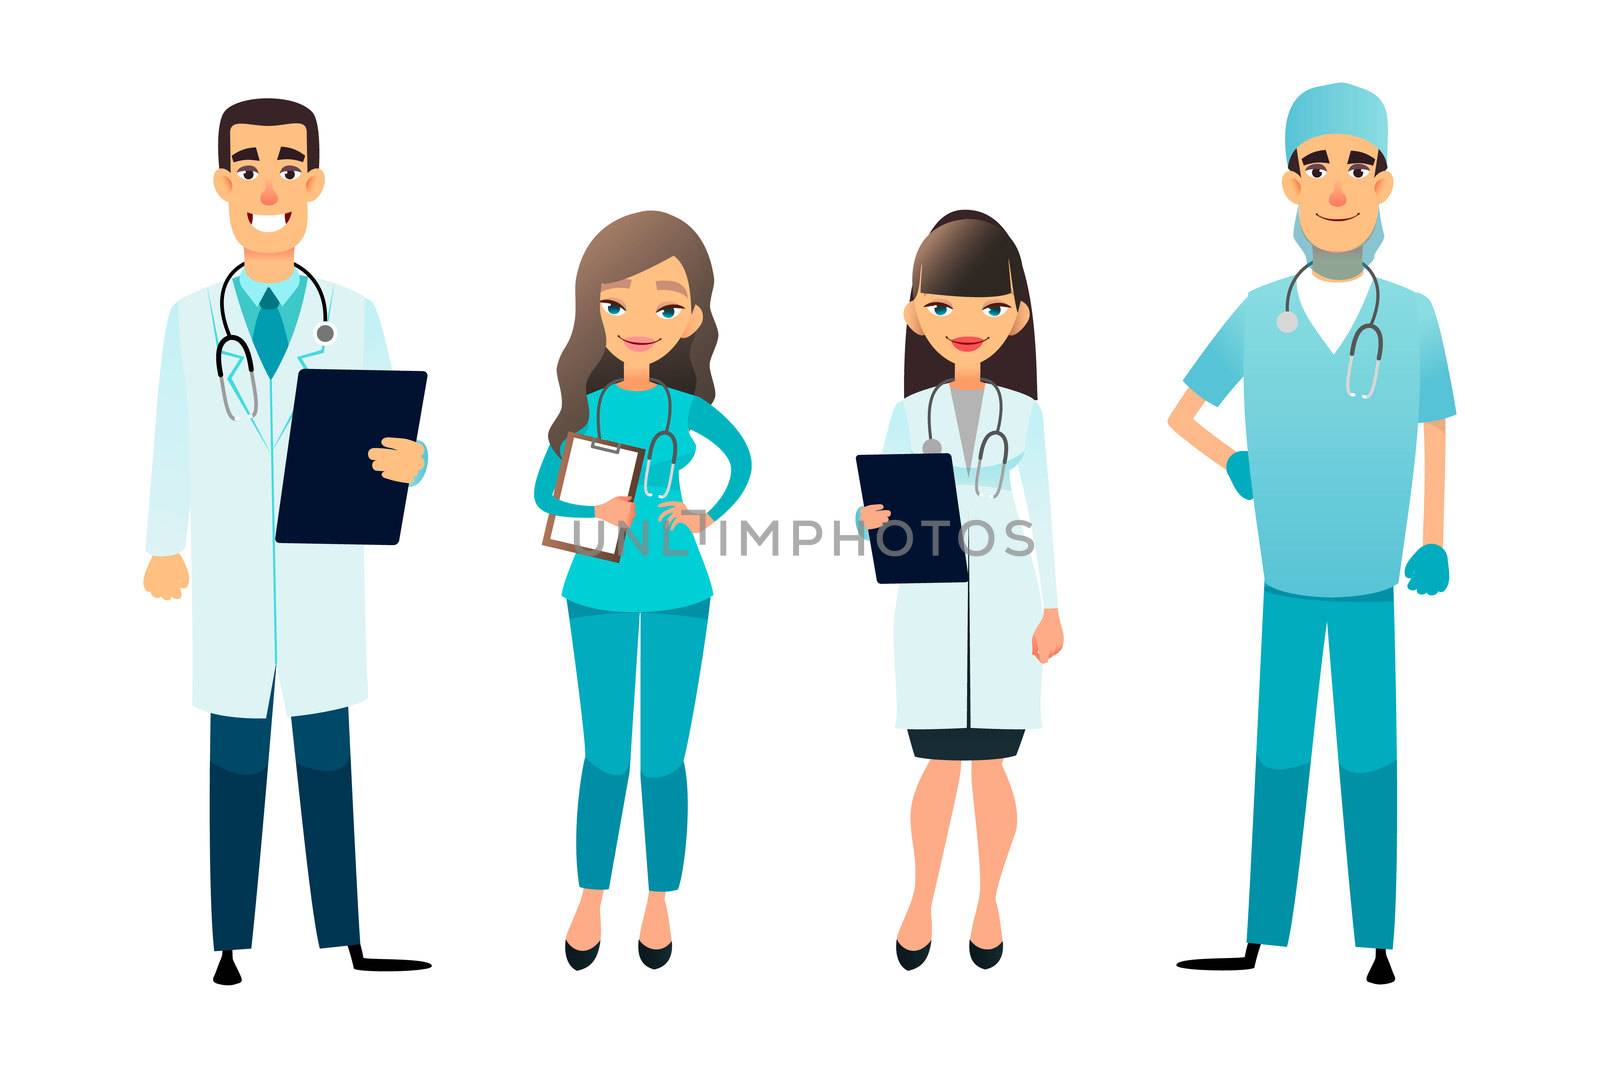 Doctors and nurses team. Cartoon medical staff. Medical team concept. Surgeon, nurse and therapist on hospital. Professional health workers